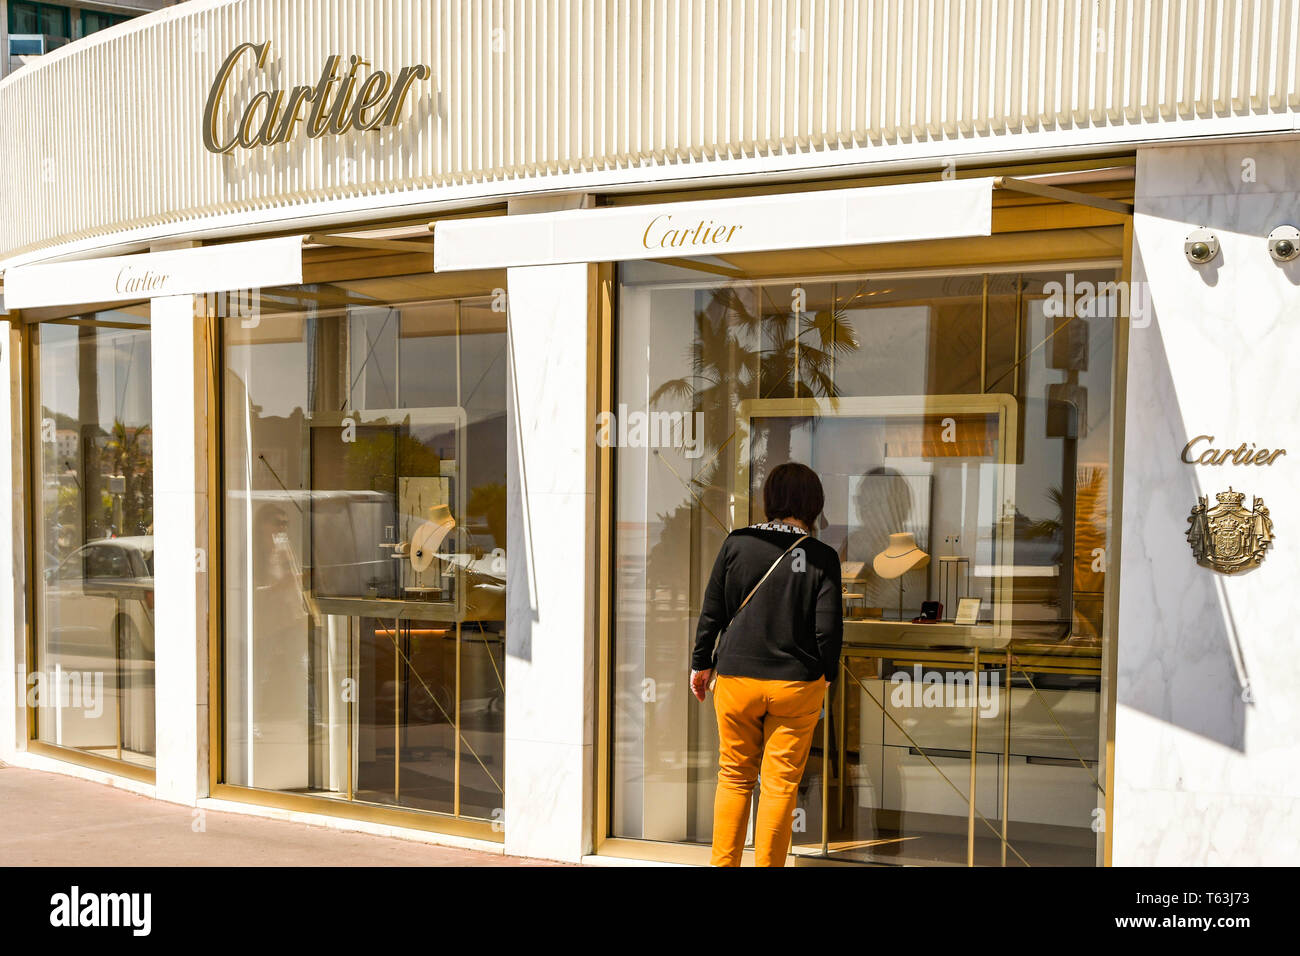 cartier shop online france